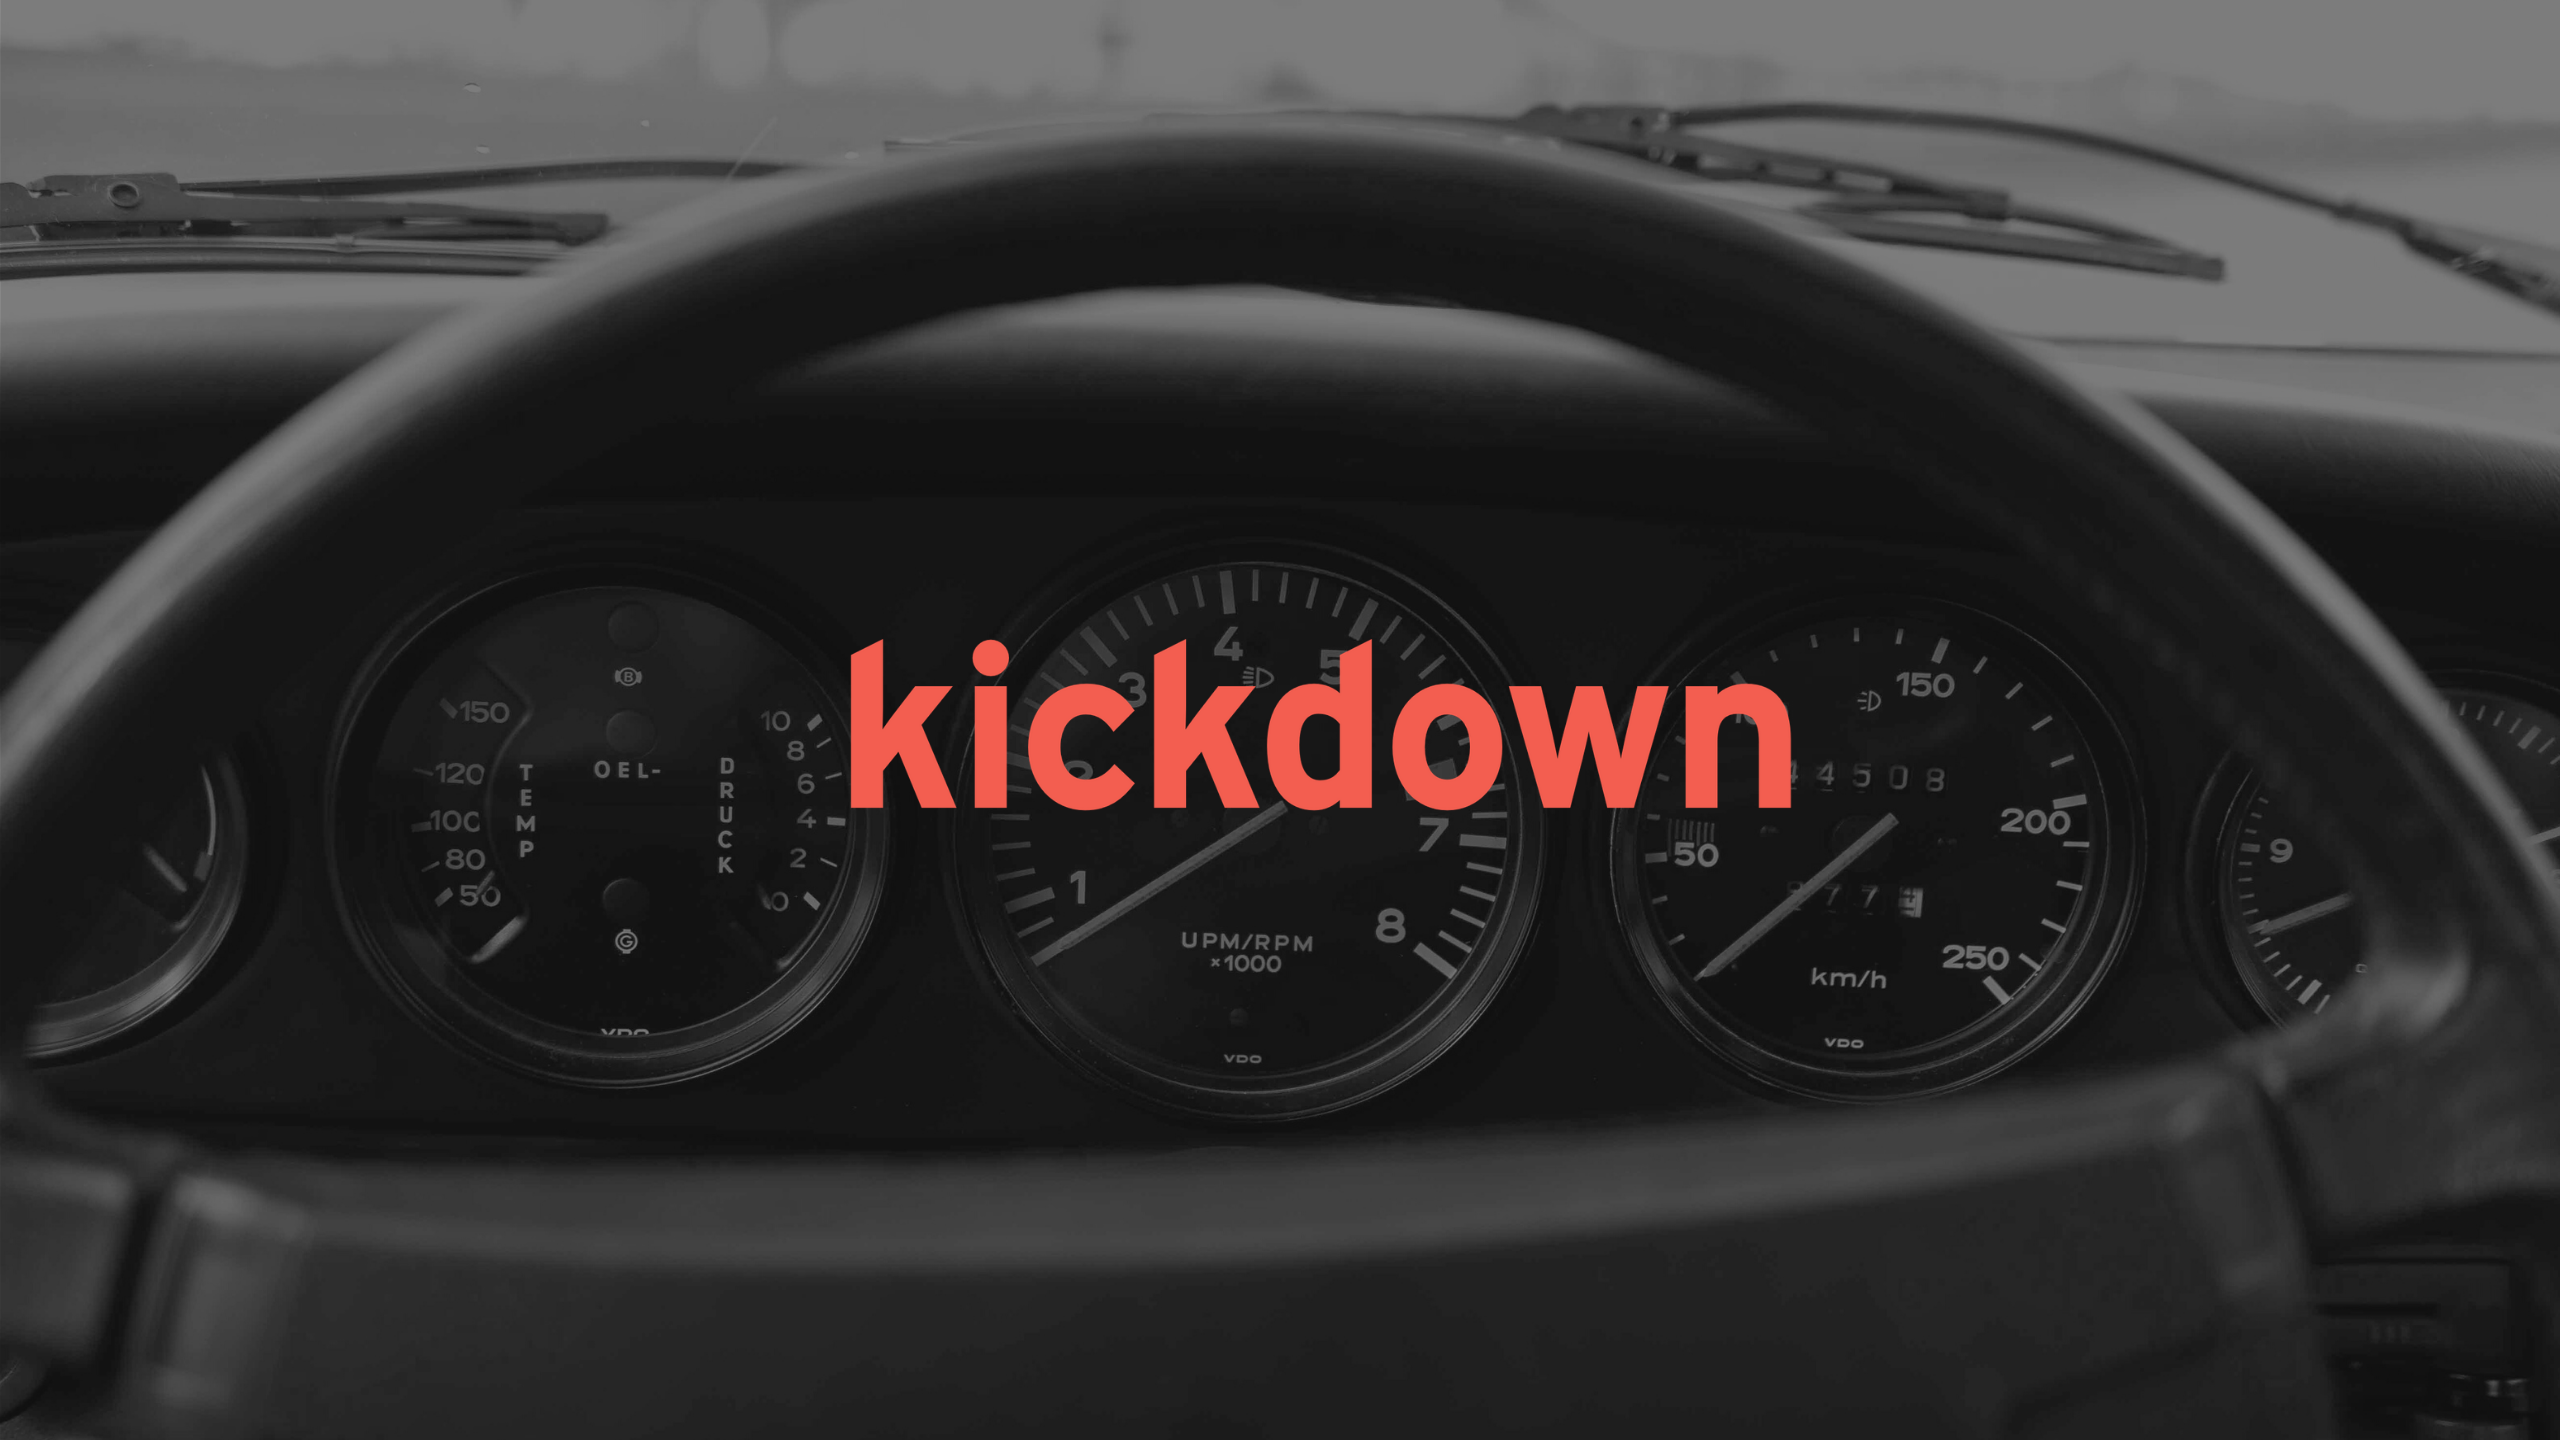 Kickdown / startup from Hamburg / Background